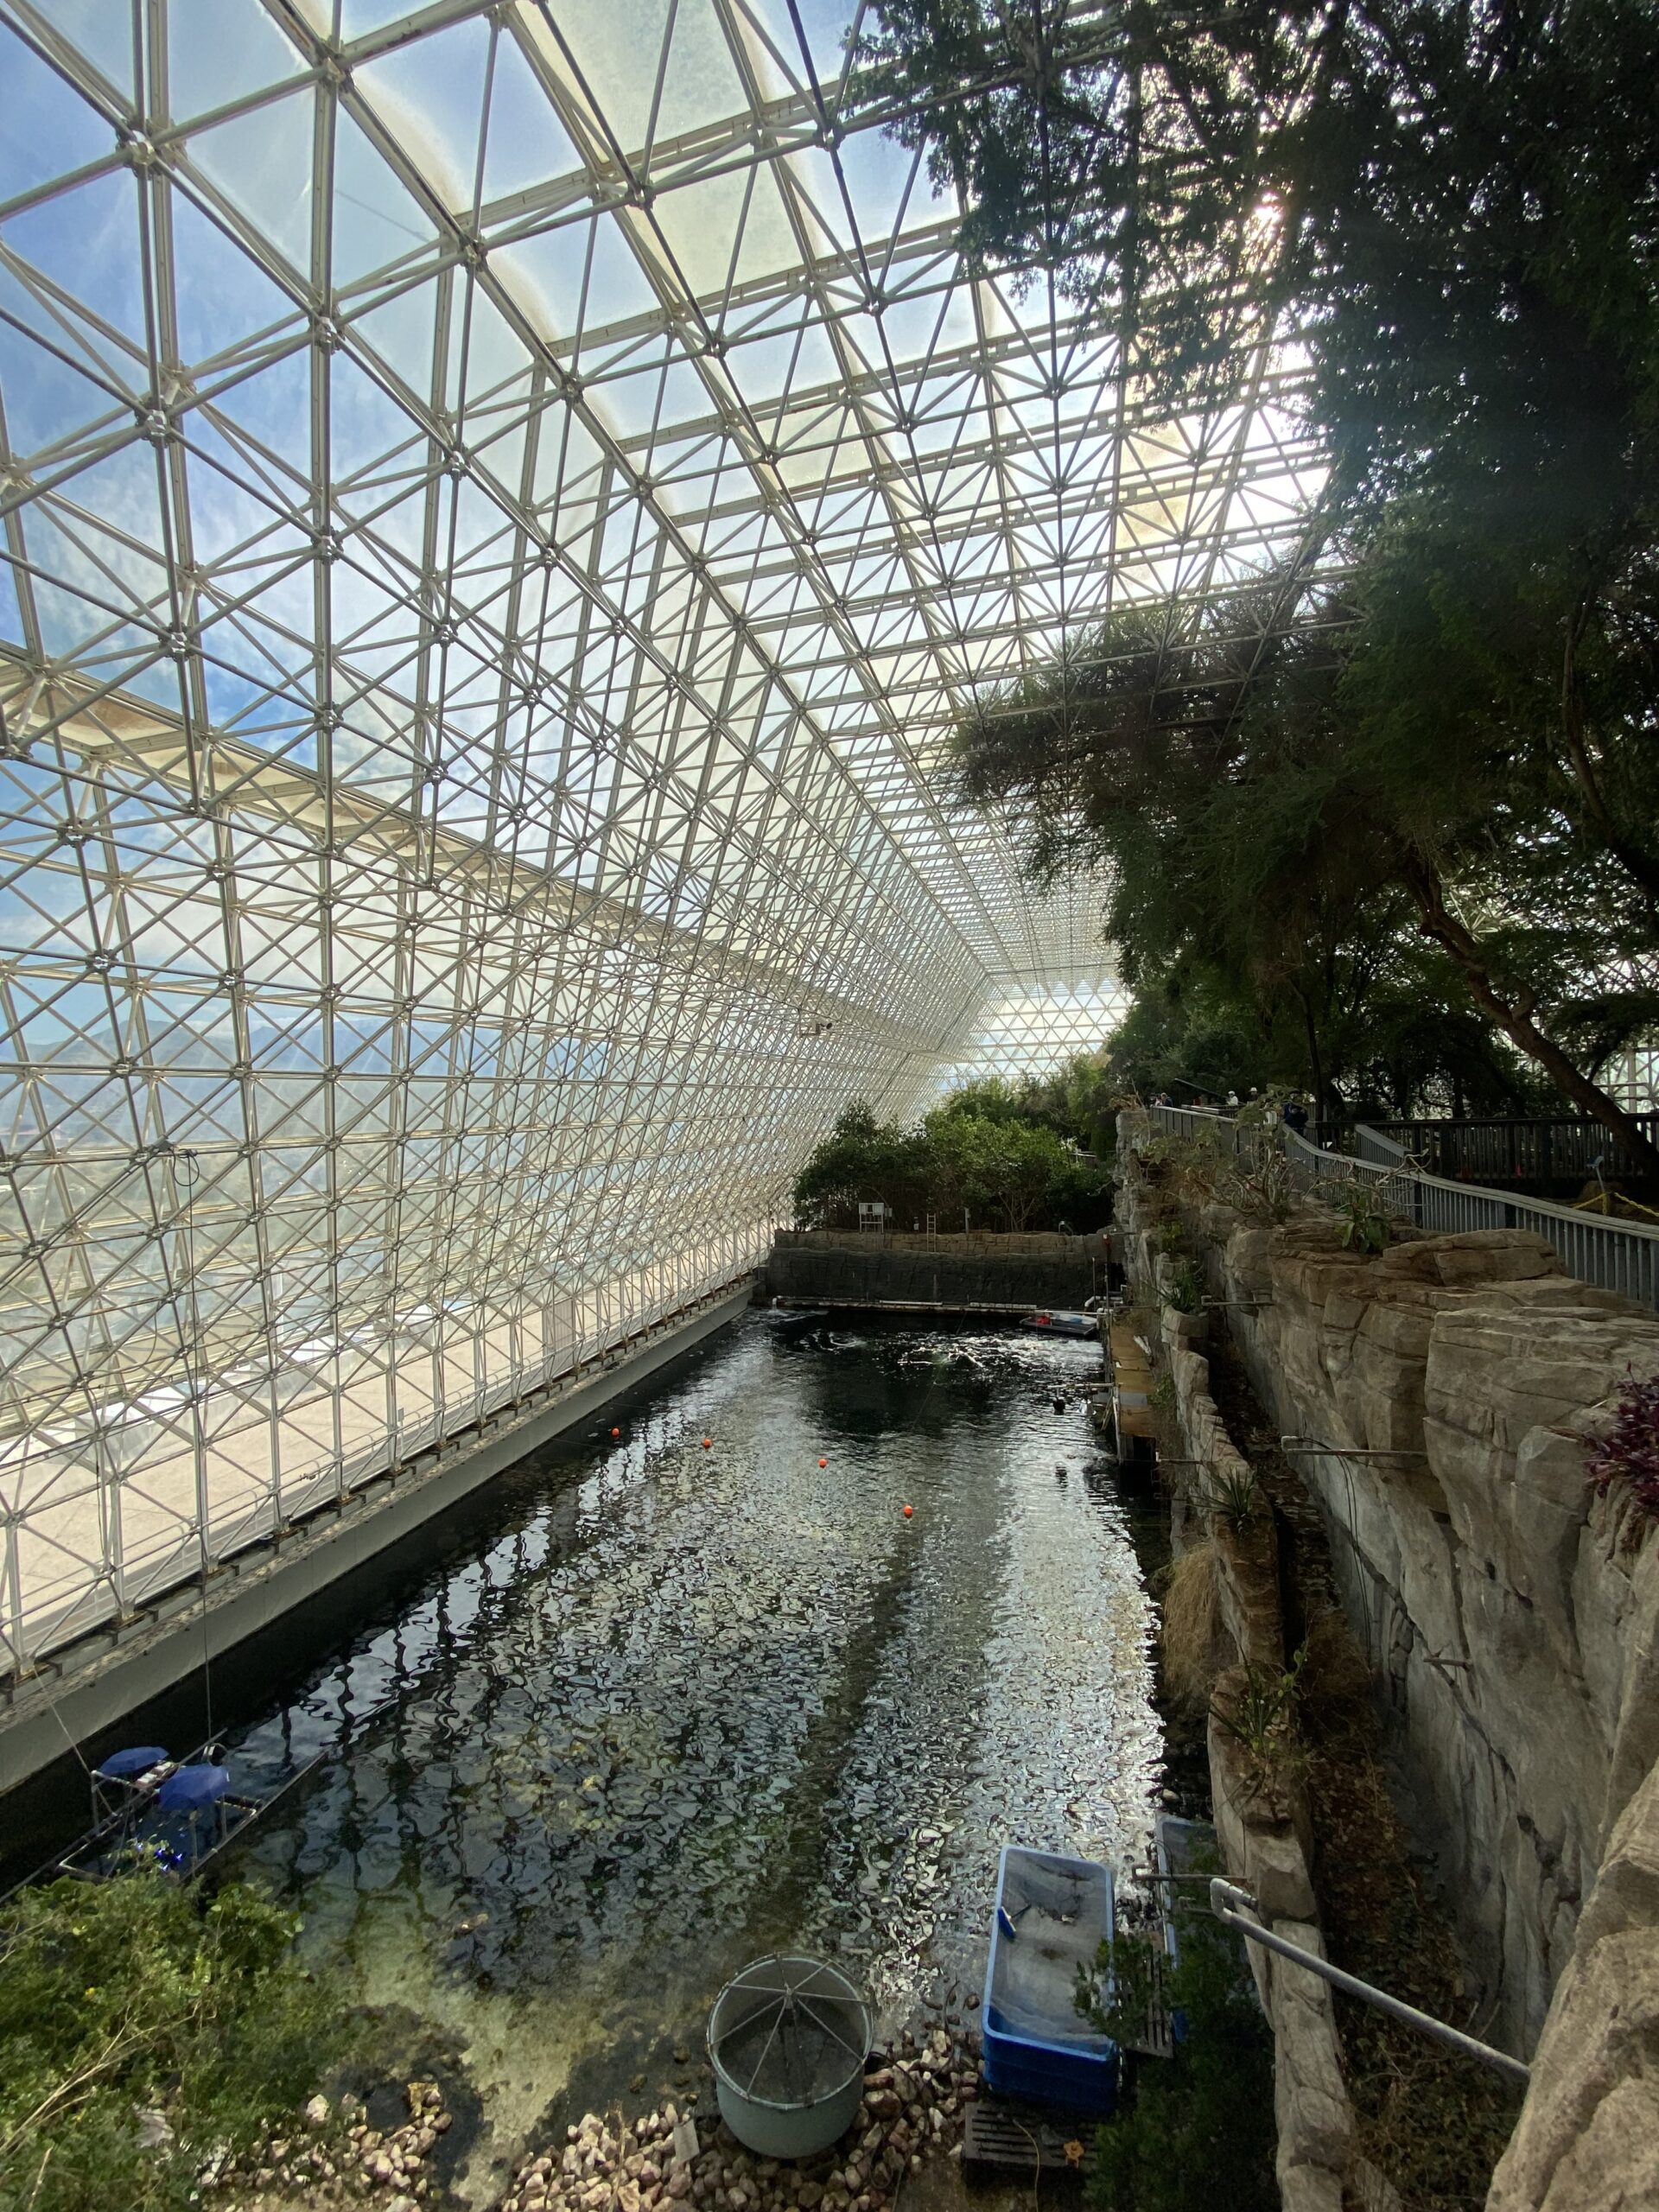 Picture inside Biosphere 2 In arizona